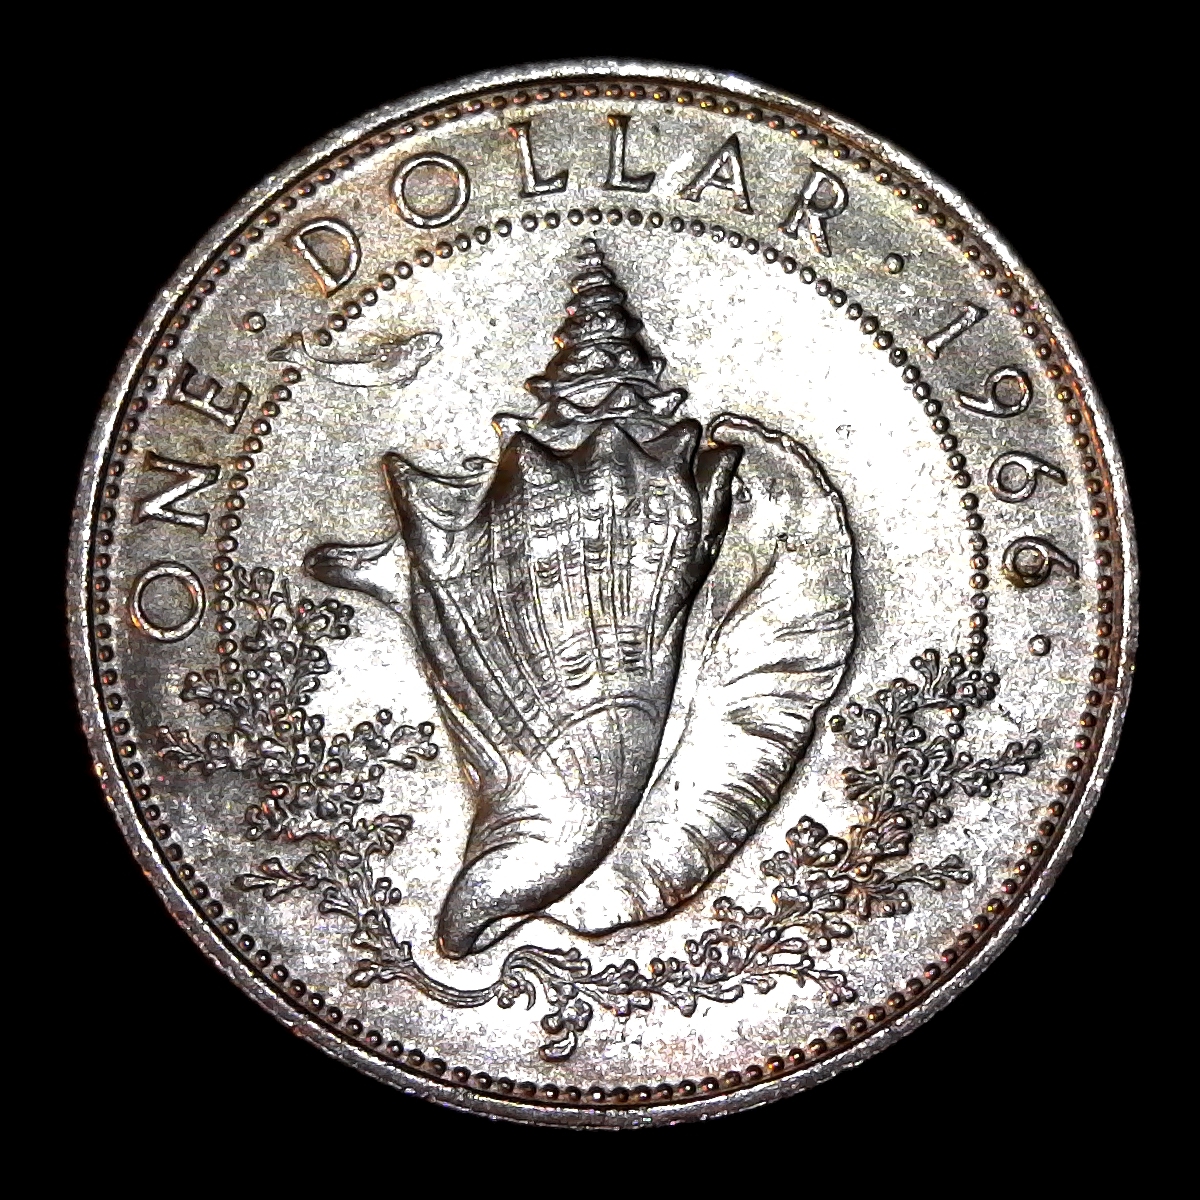 Bahamas Islands One Dollar 1966 obv.jpg